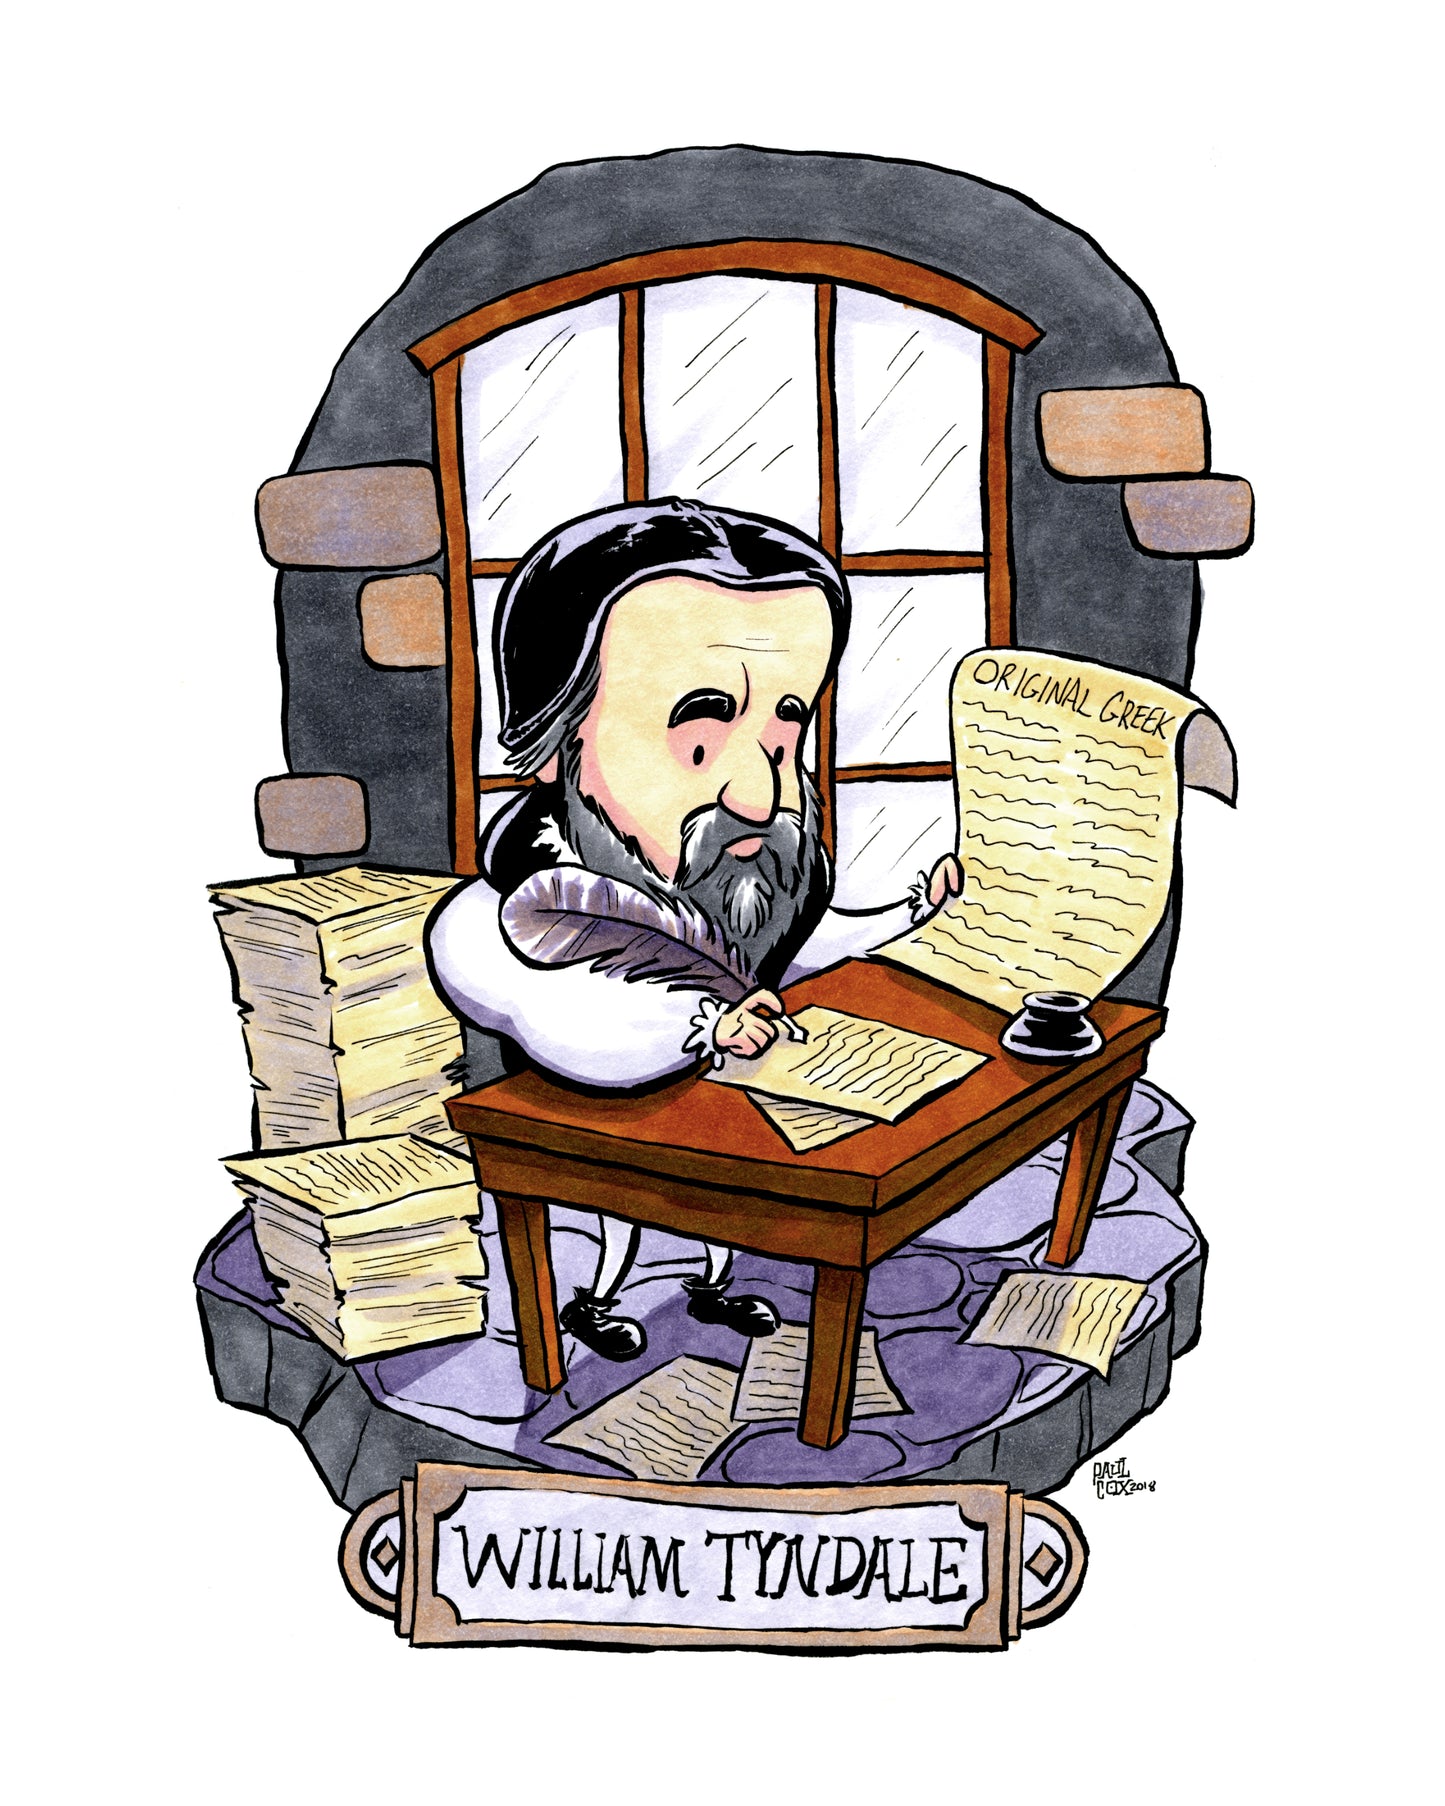 PRINT: William Tyndale